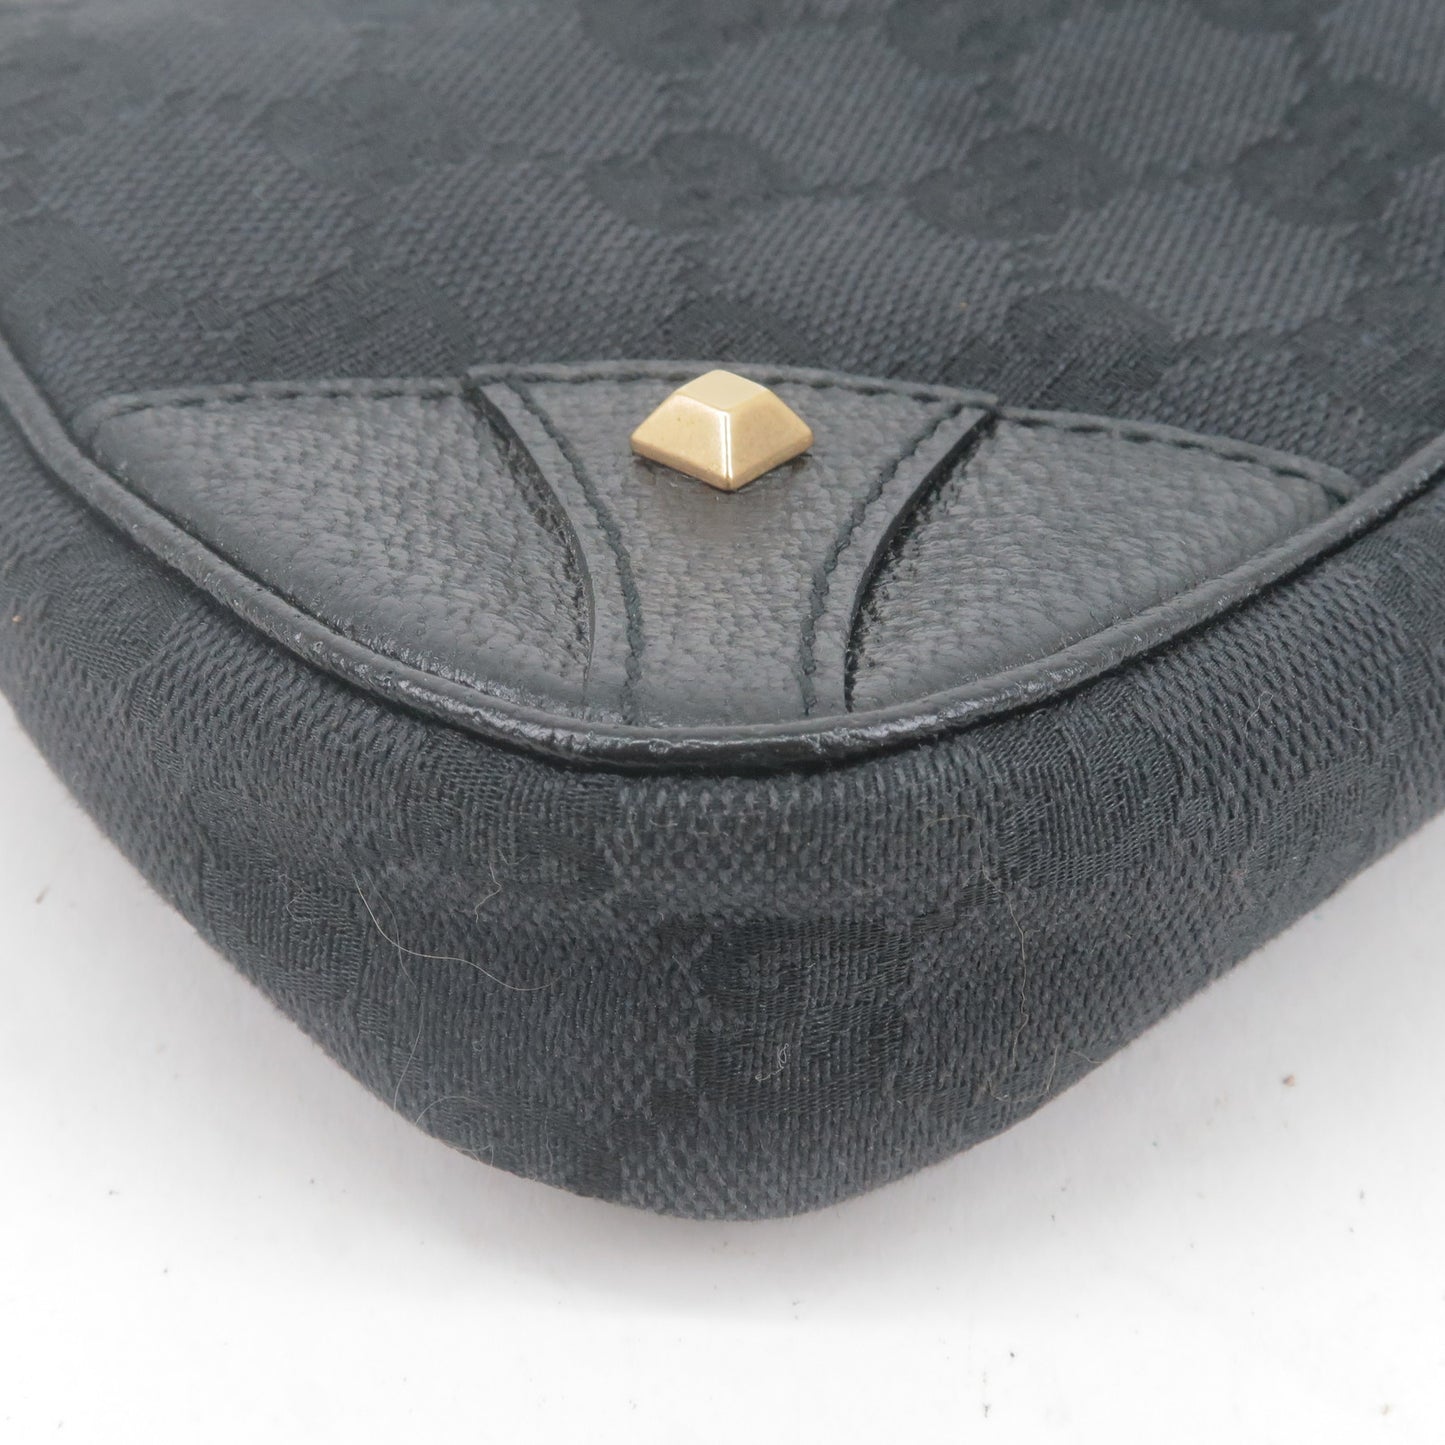 GUCCI GG Canvas Leather Chain Shoulder Bag Purse Black 120940